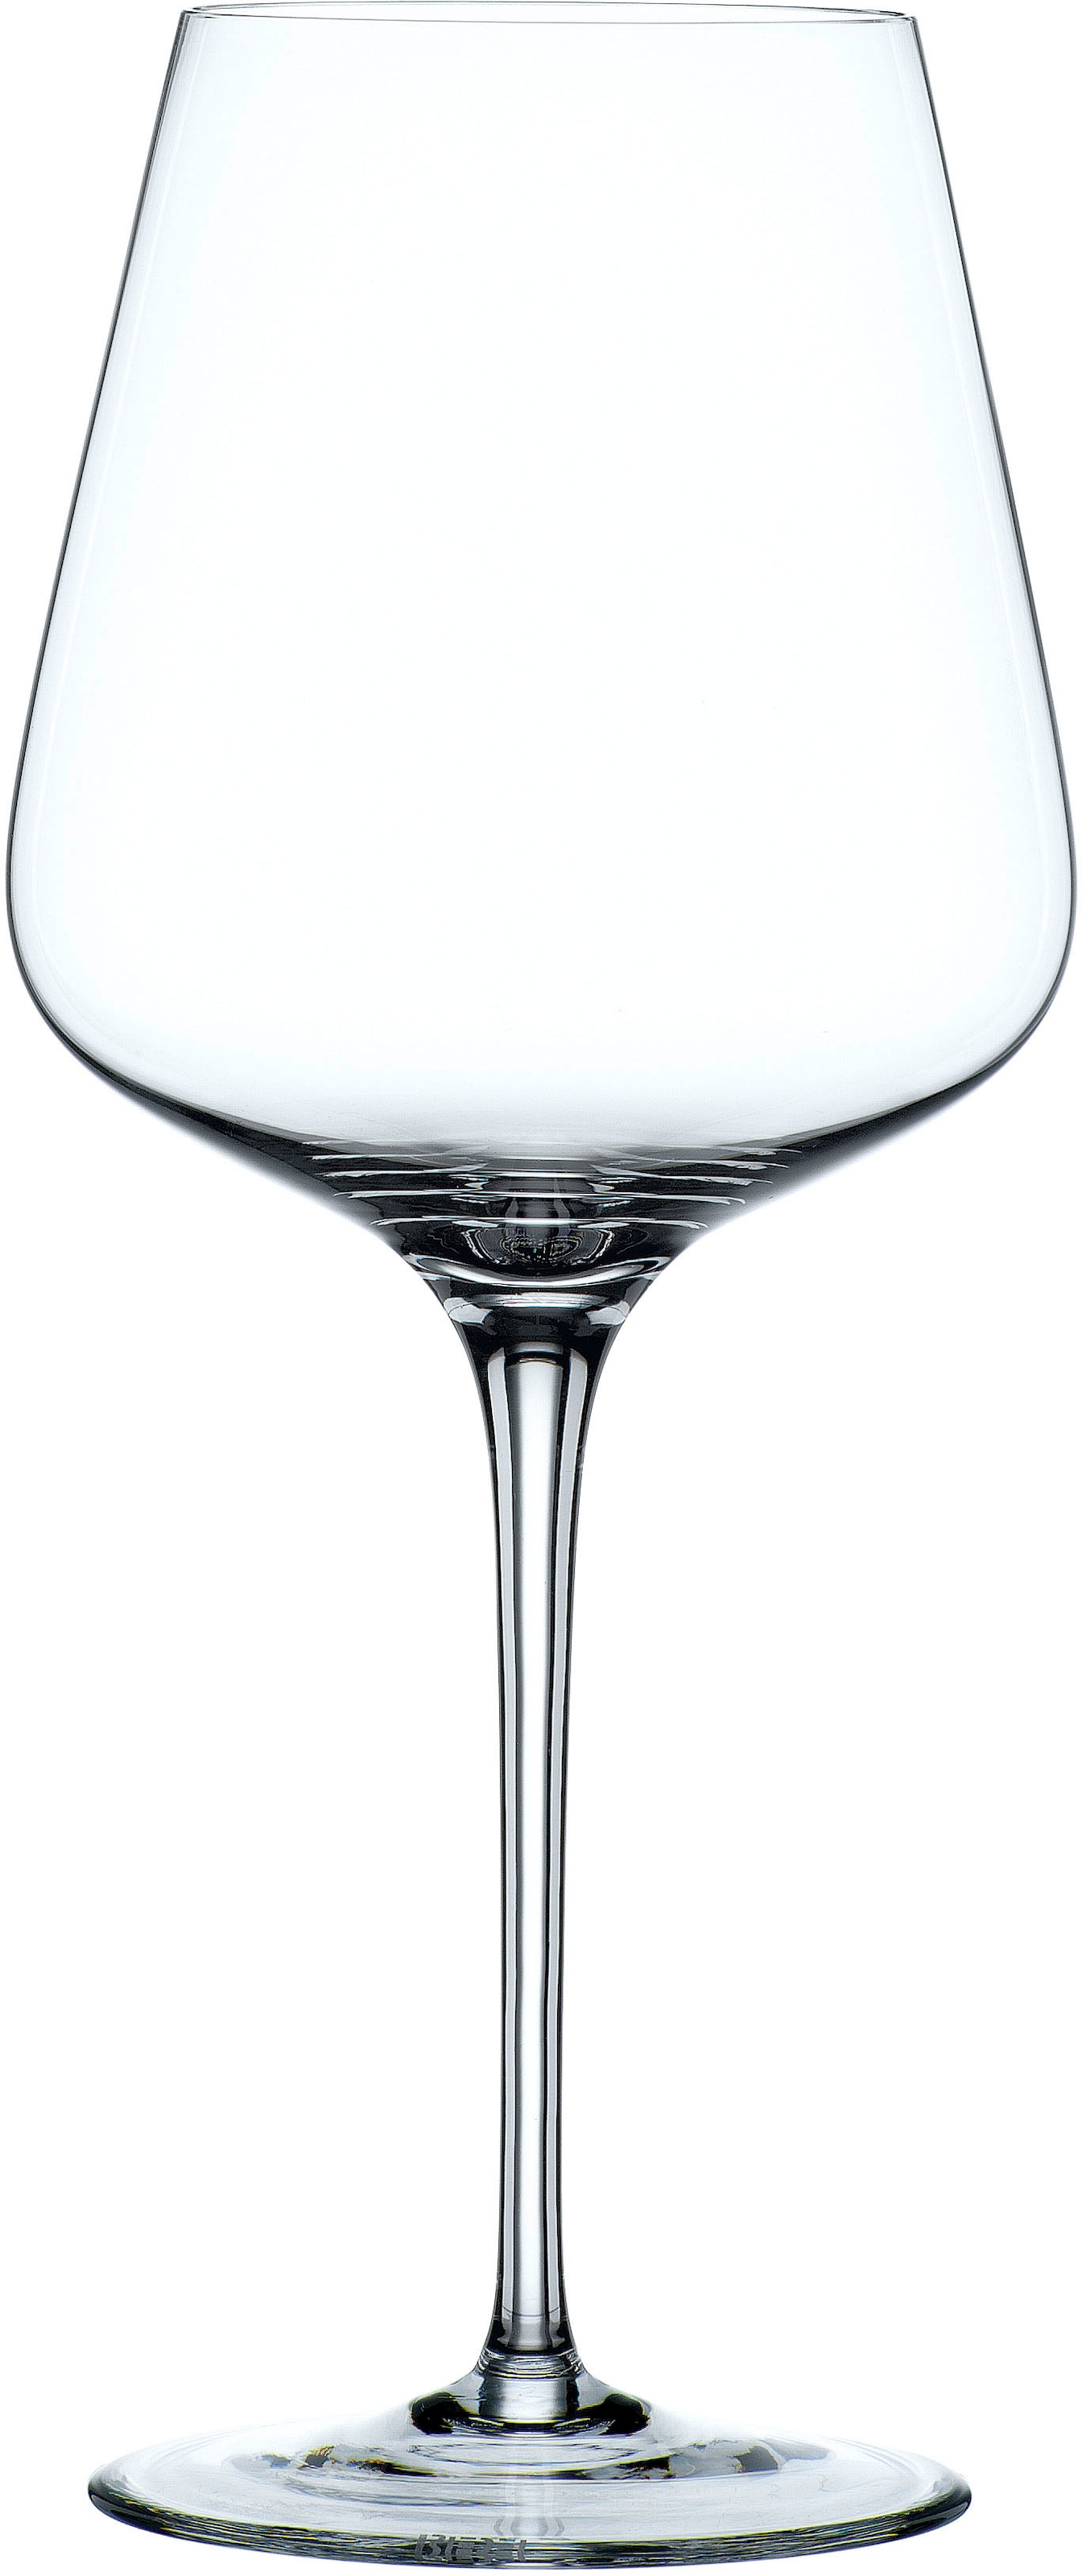 Nachtmann Rotweinglas »ViNova«, (Set, 4 tlg., Set bestehend aus 4 Gläsern), 680 ml, 4-teilig, Made in Germany